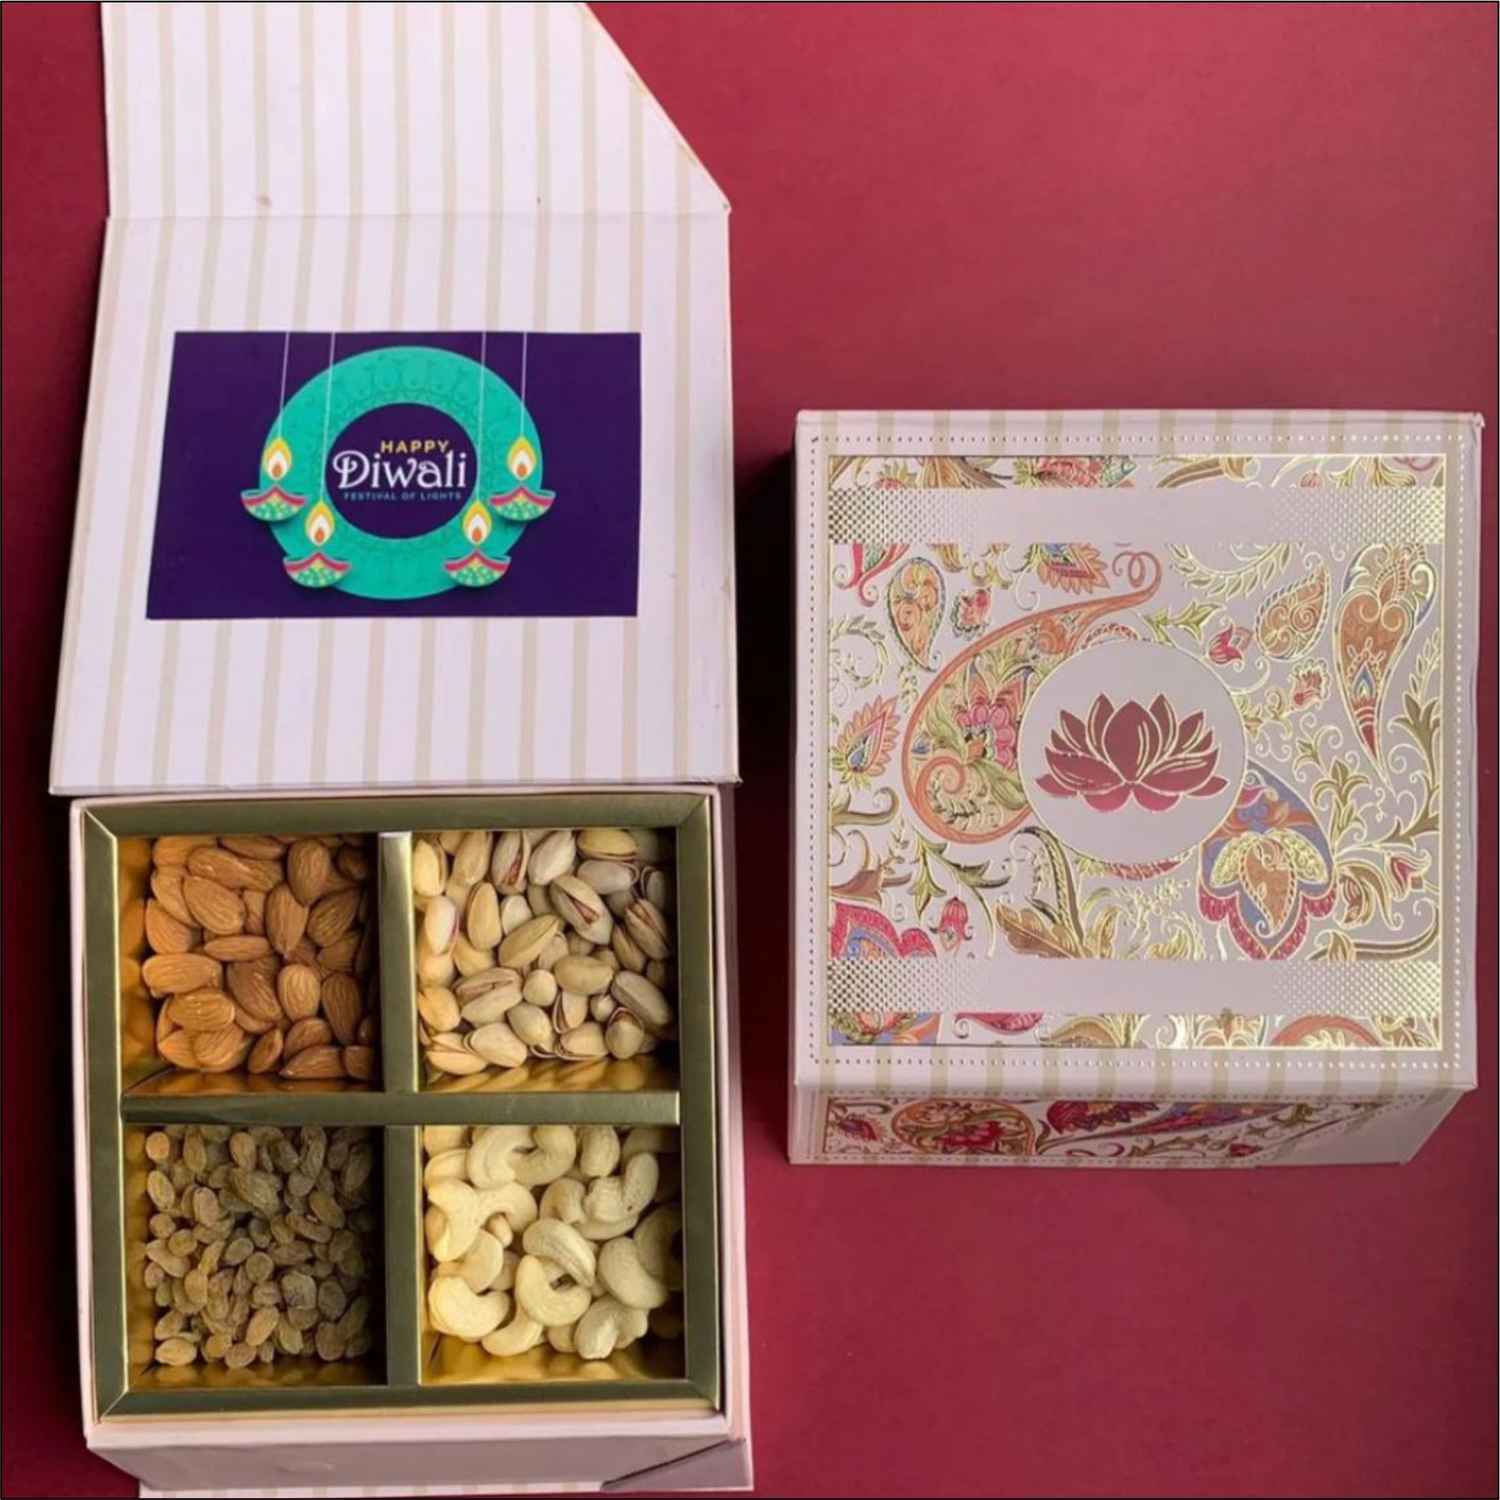 ZOROY Diwali Gift Box with 500 Gms Assortment Of Almond Raisins Cashew